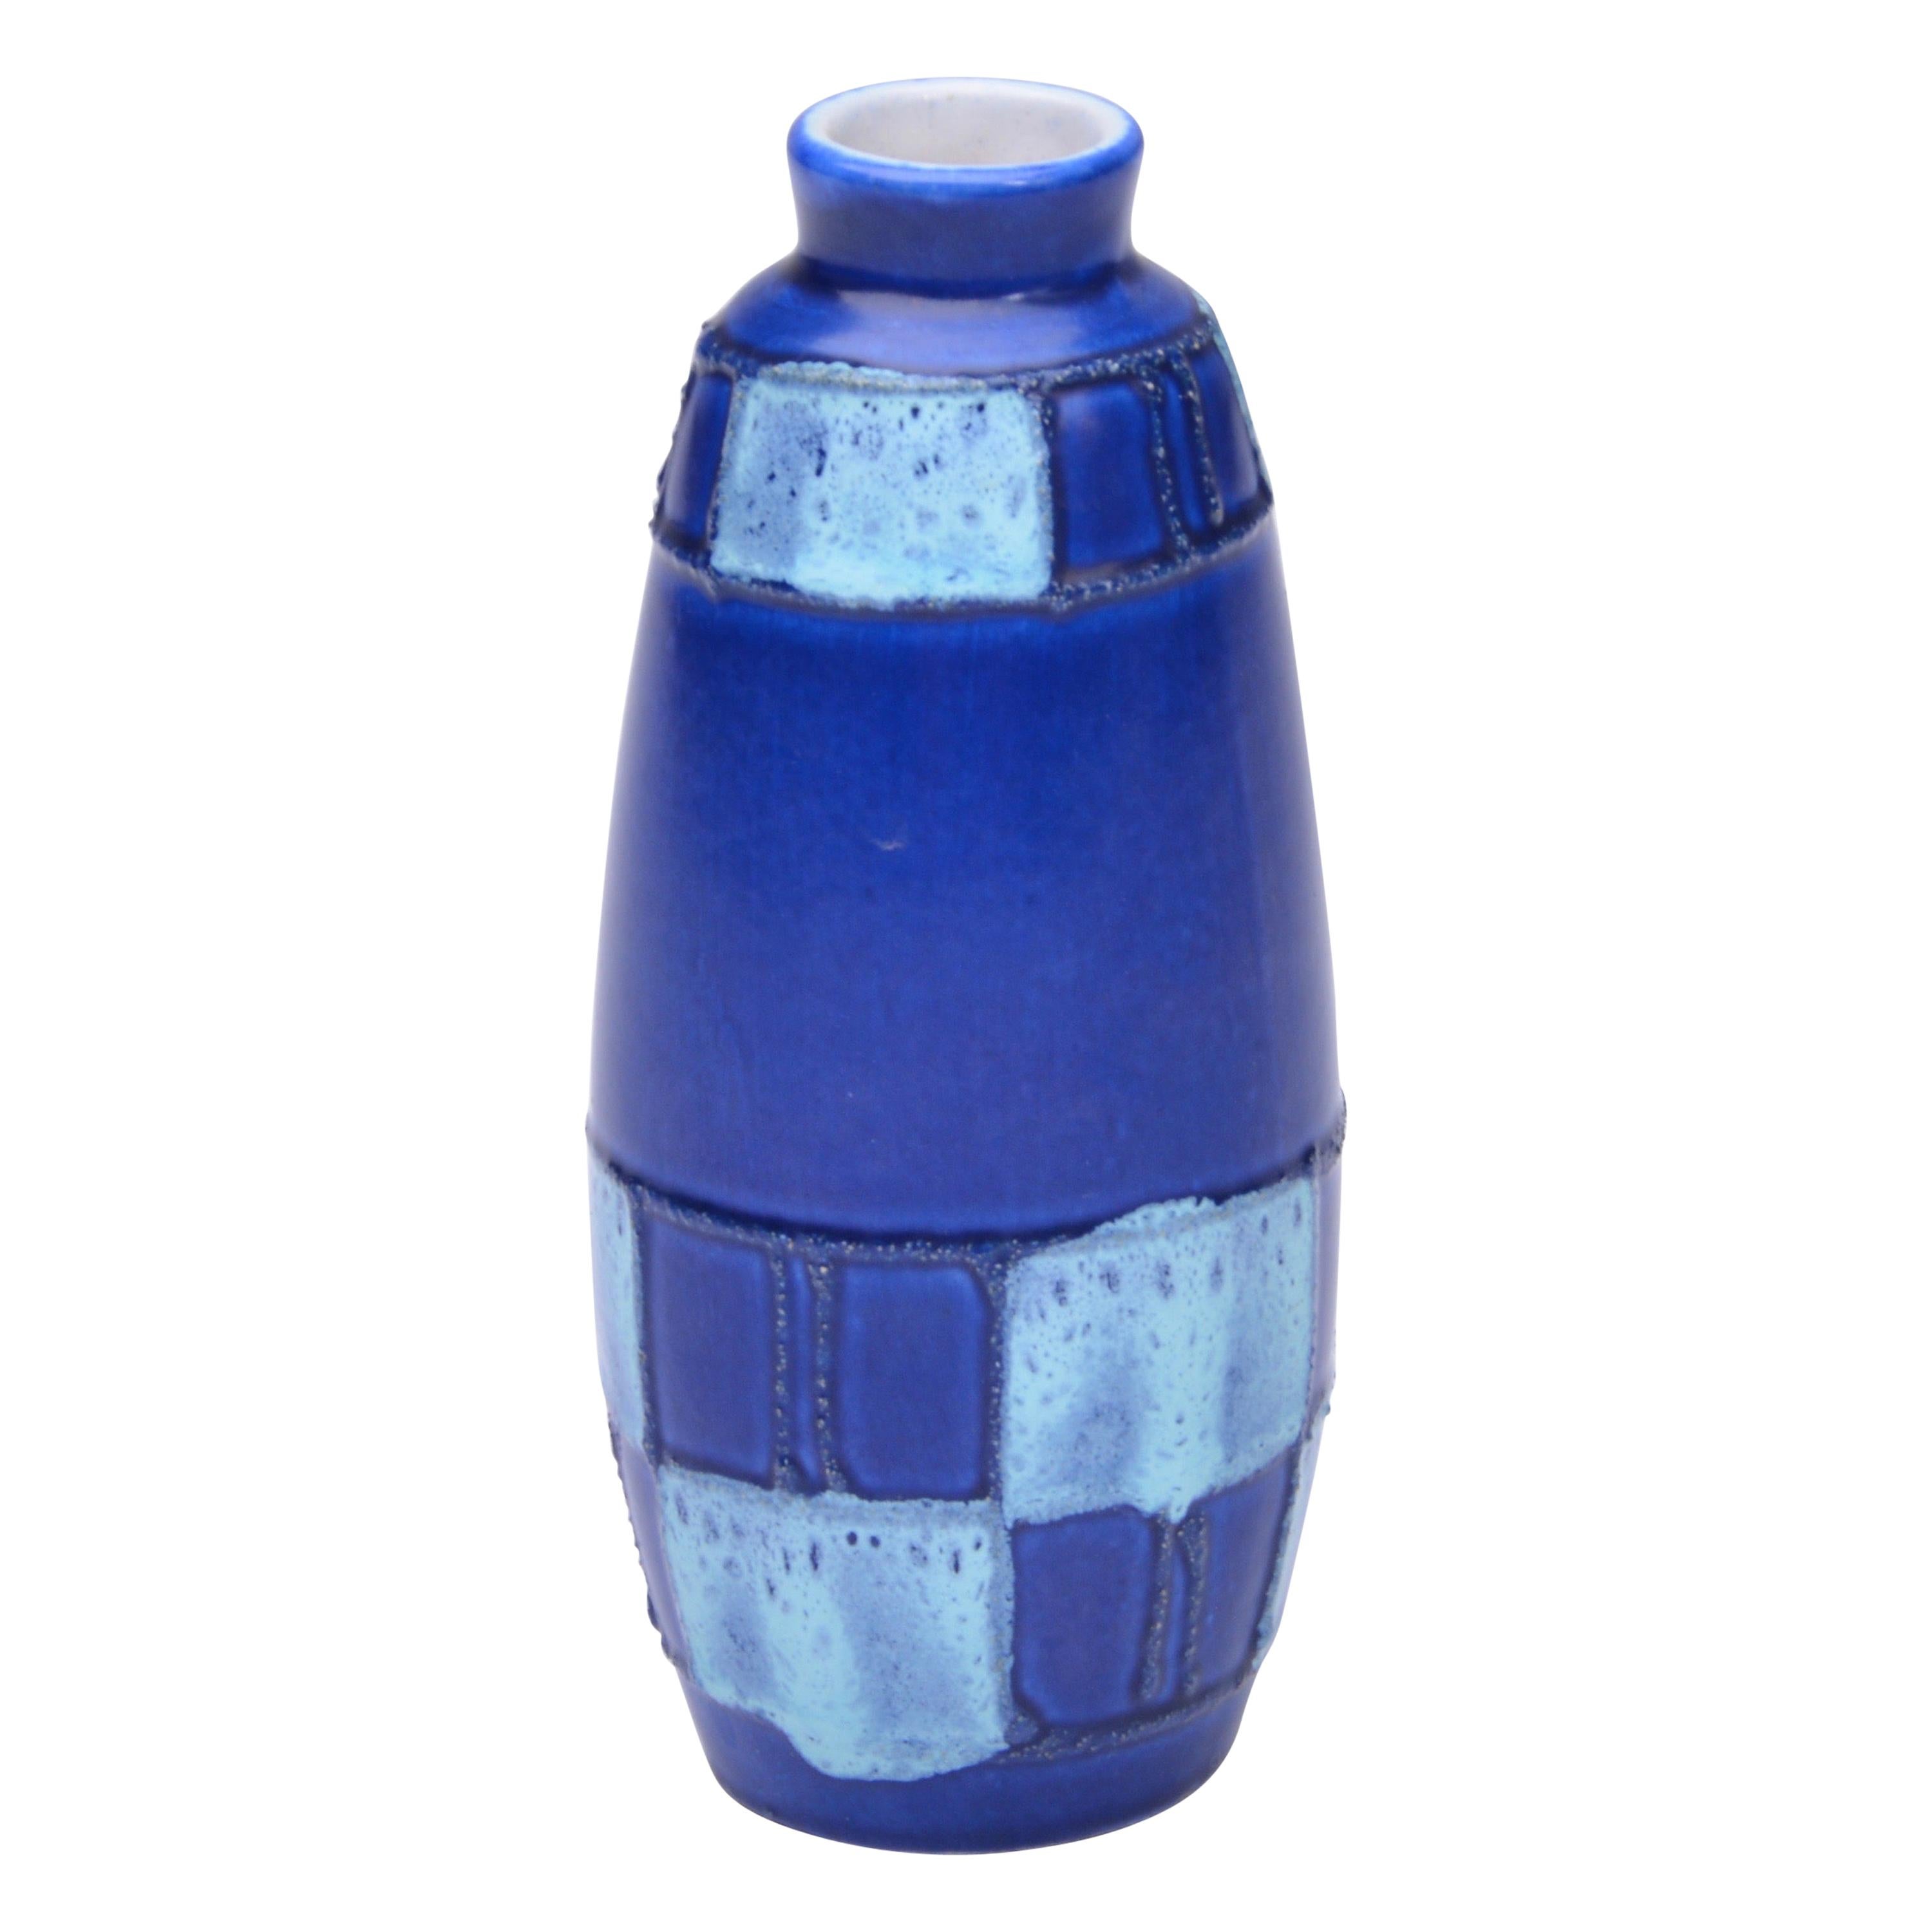 Small Blue Ceramic Vase by Strehla Keramik, 1950s